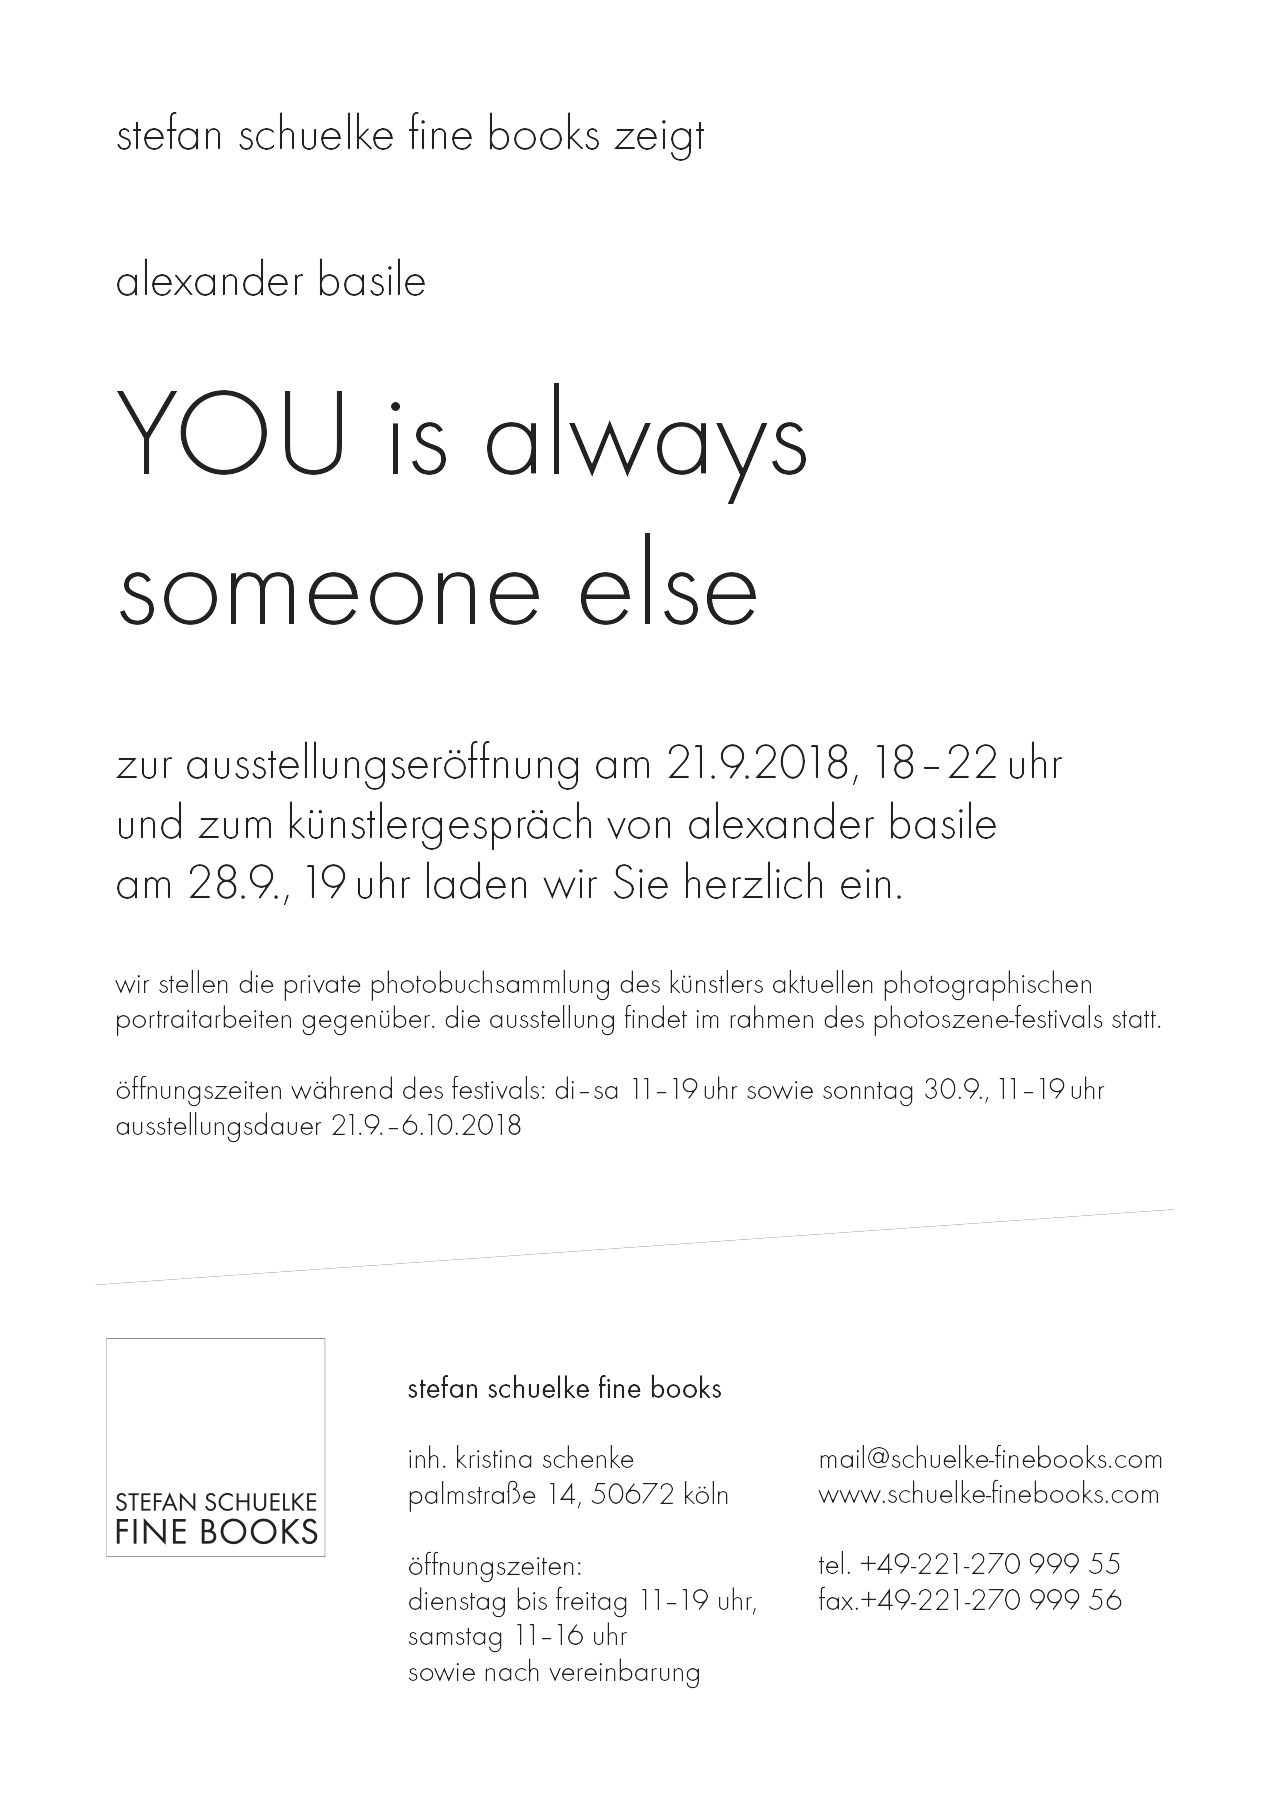 Alexander Basile - YOU is always someone else - exhibition - Stefan Schuelke Fine Books